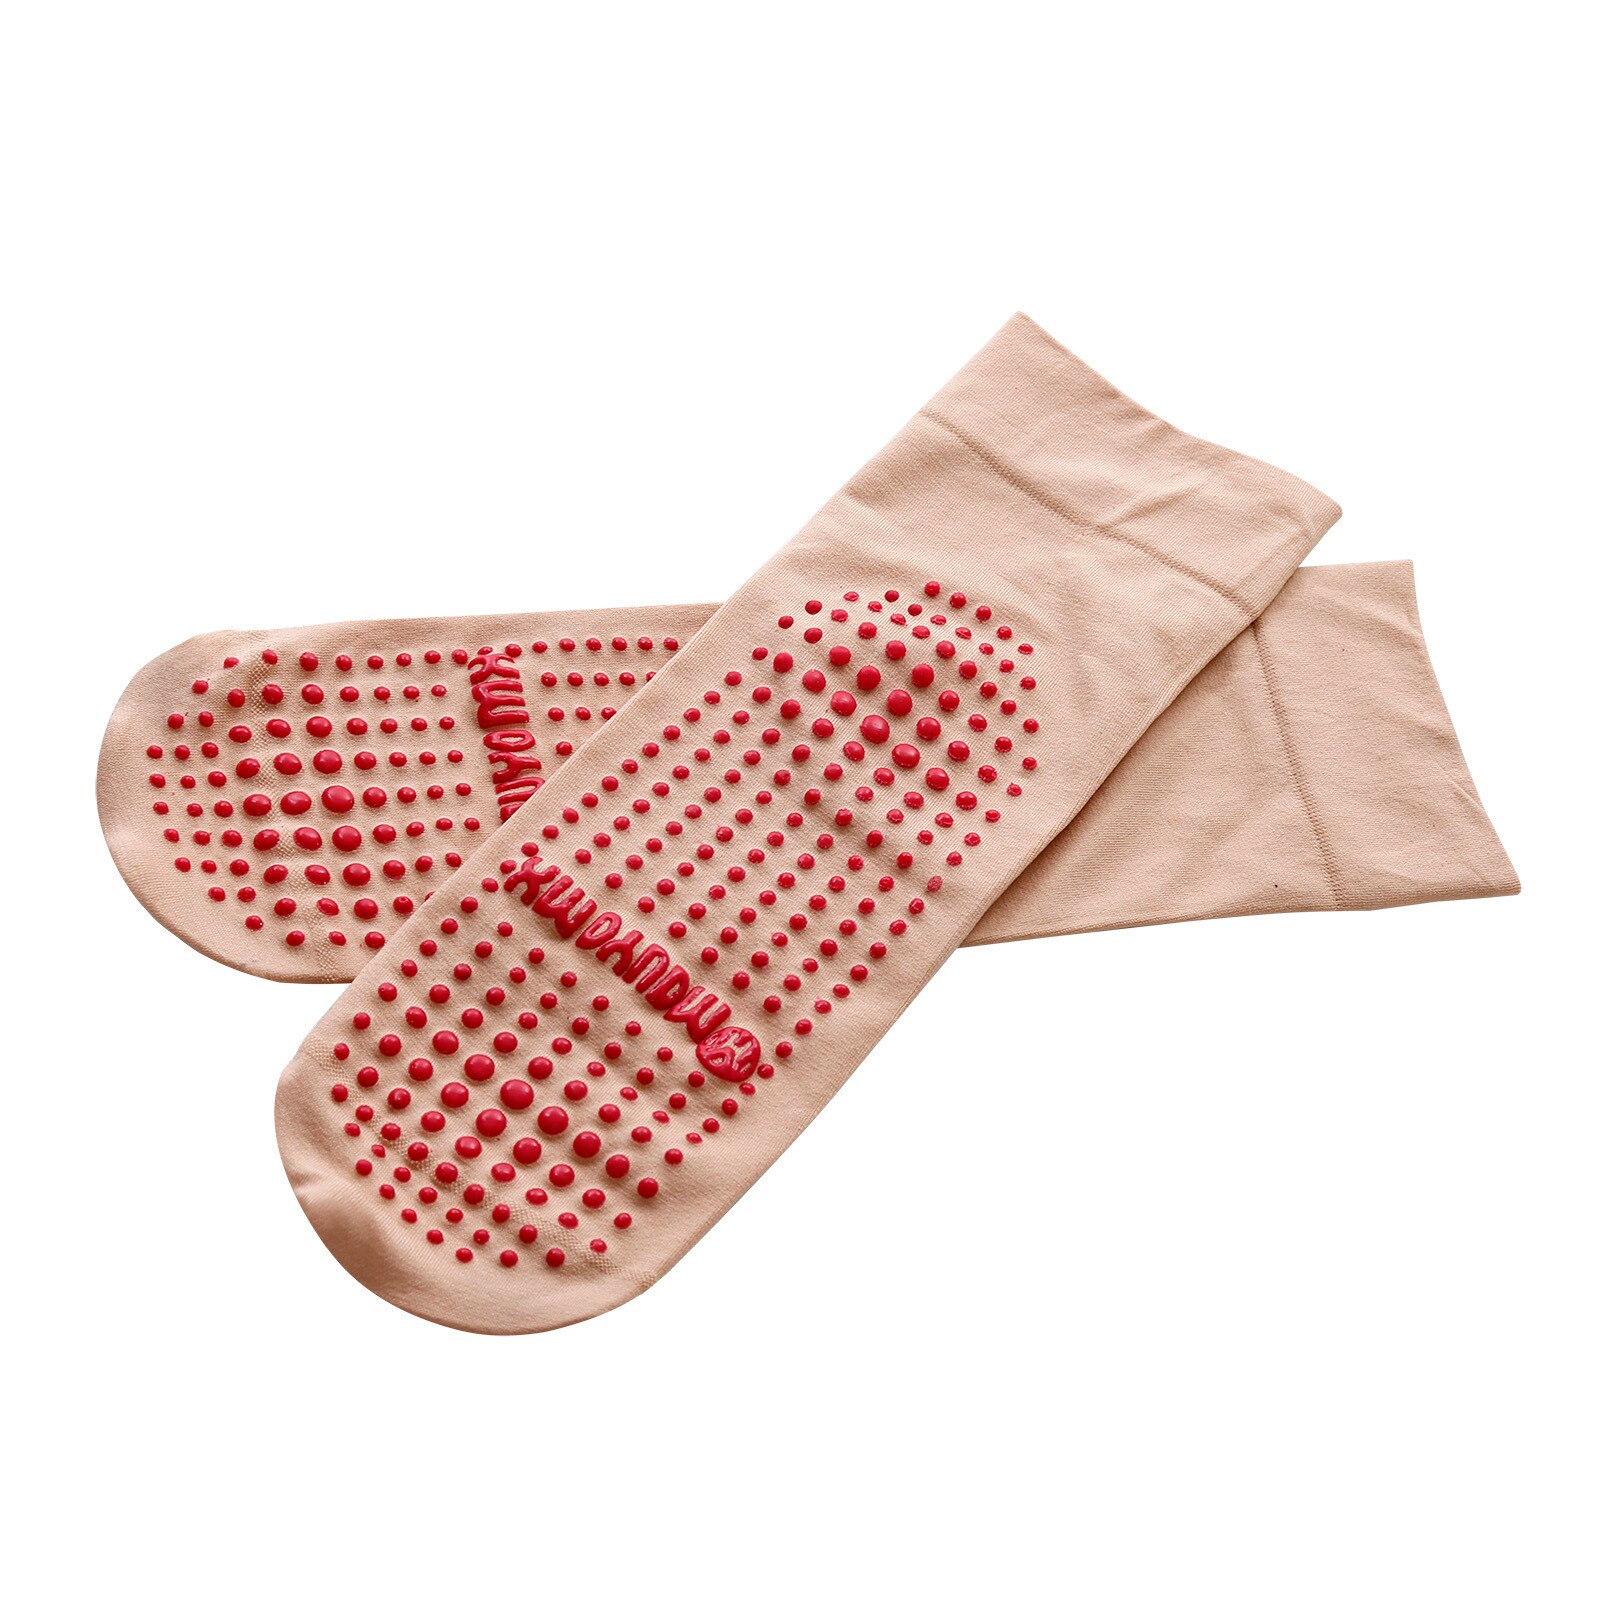 2020 uomo donna calzini sportivi calzini magnetici in tormalina a 3 colori di buona qualità-calzini magnetici per terapia autoriscaldante Unisex